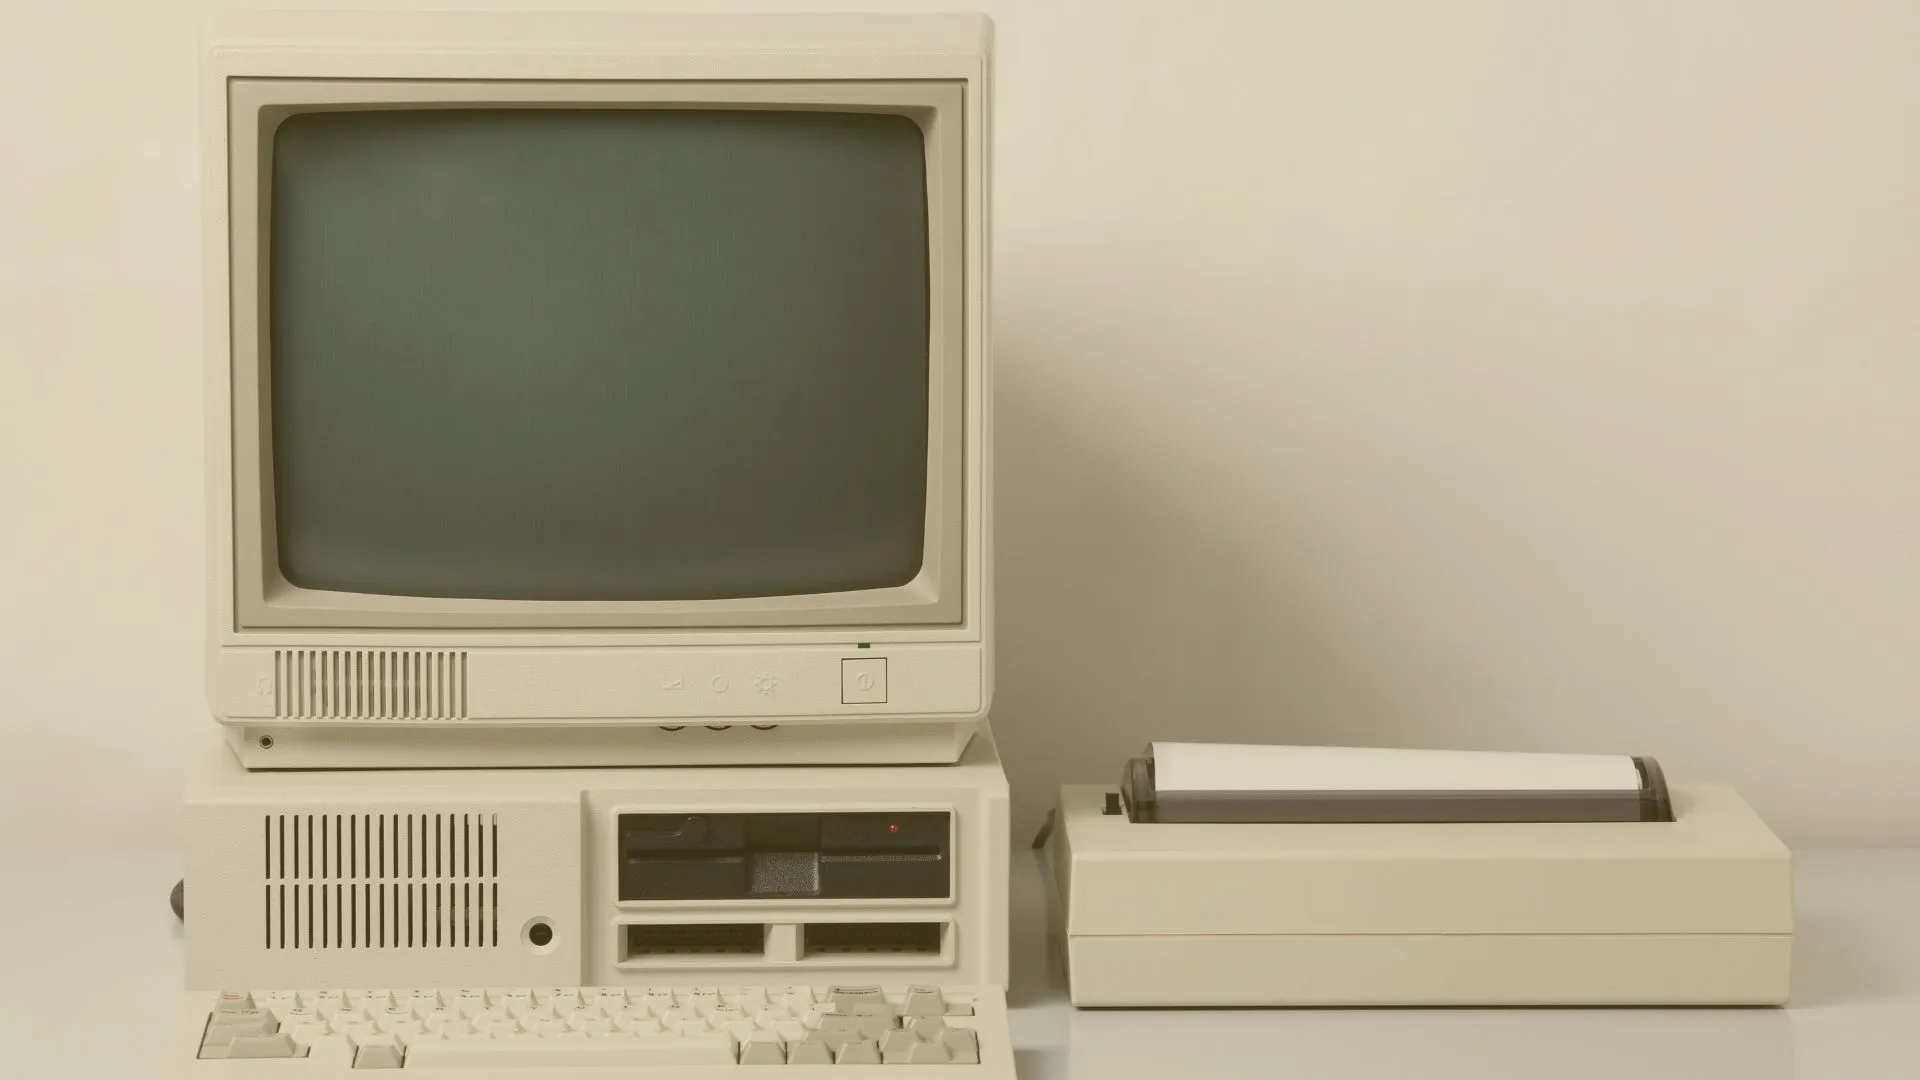 Vanha tietokone